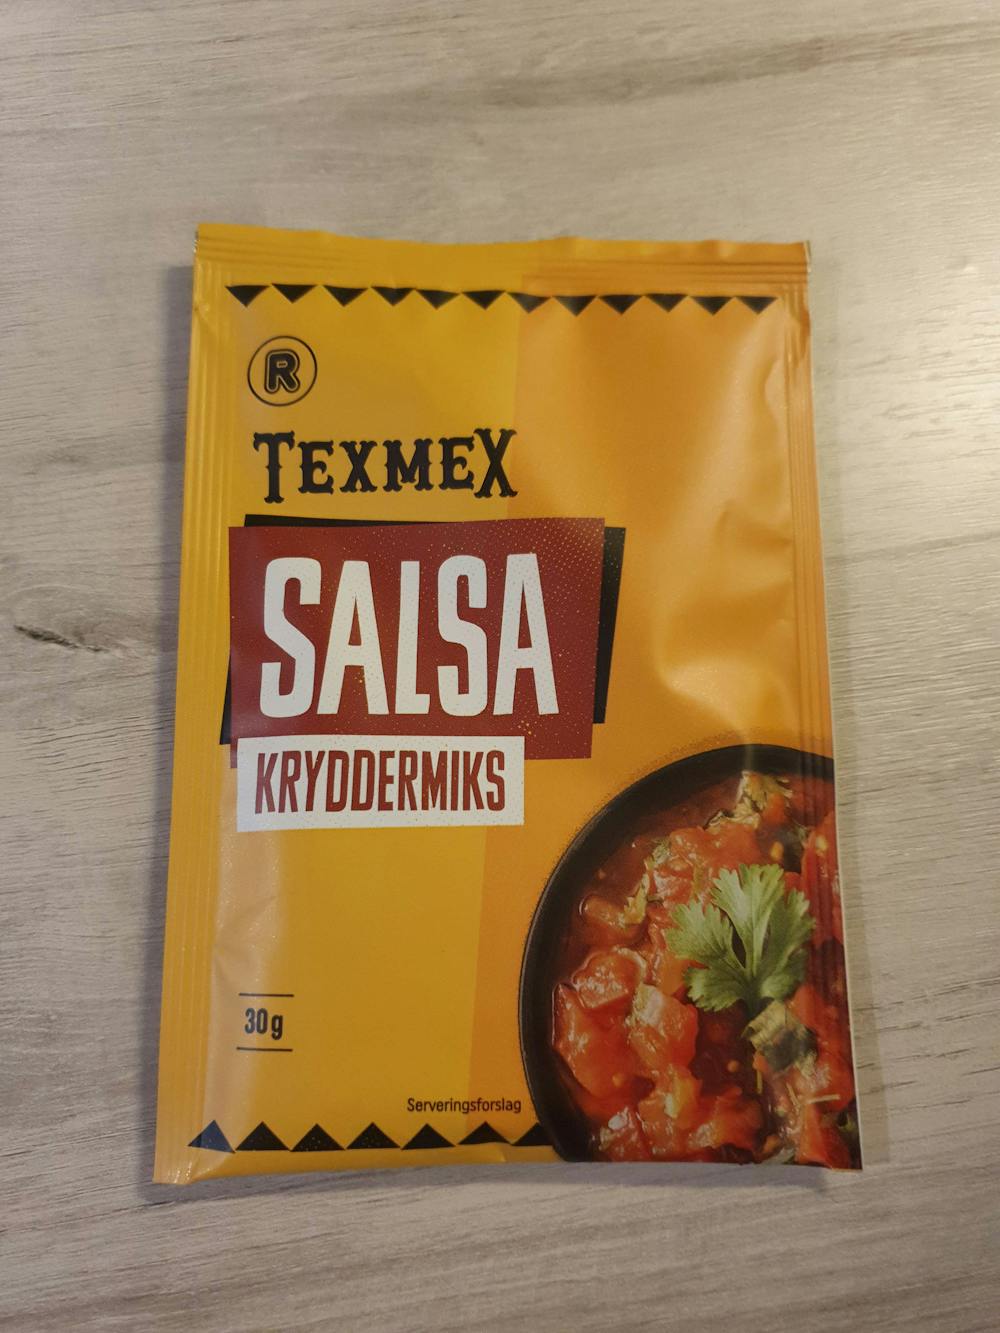 Salsa krydderblanding, Rema1000